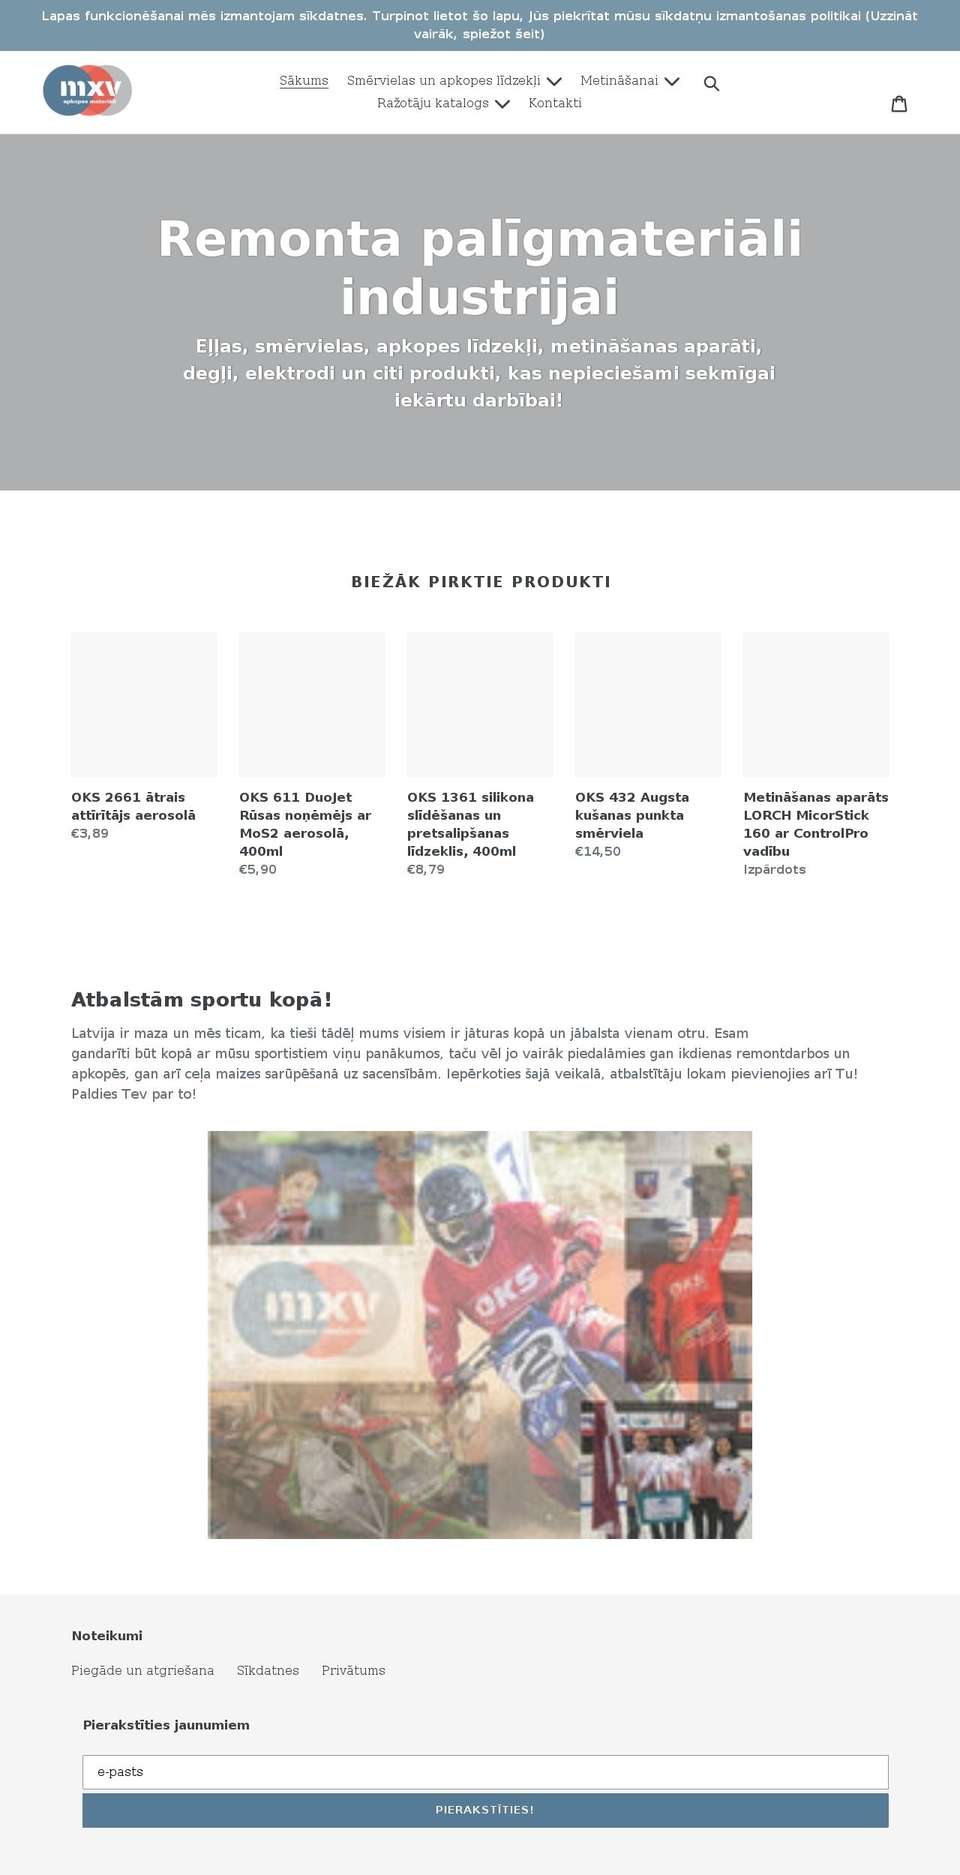 mxv.lv shopify website screenshot